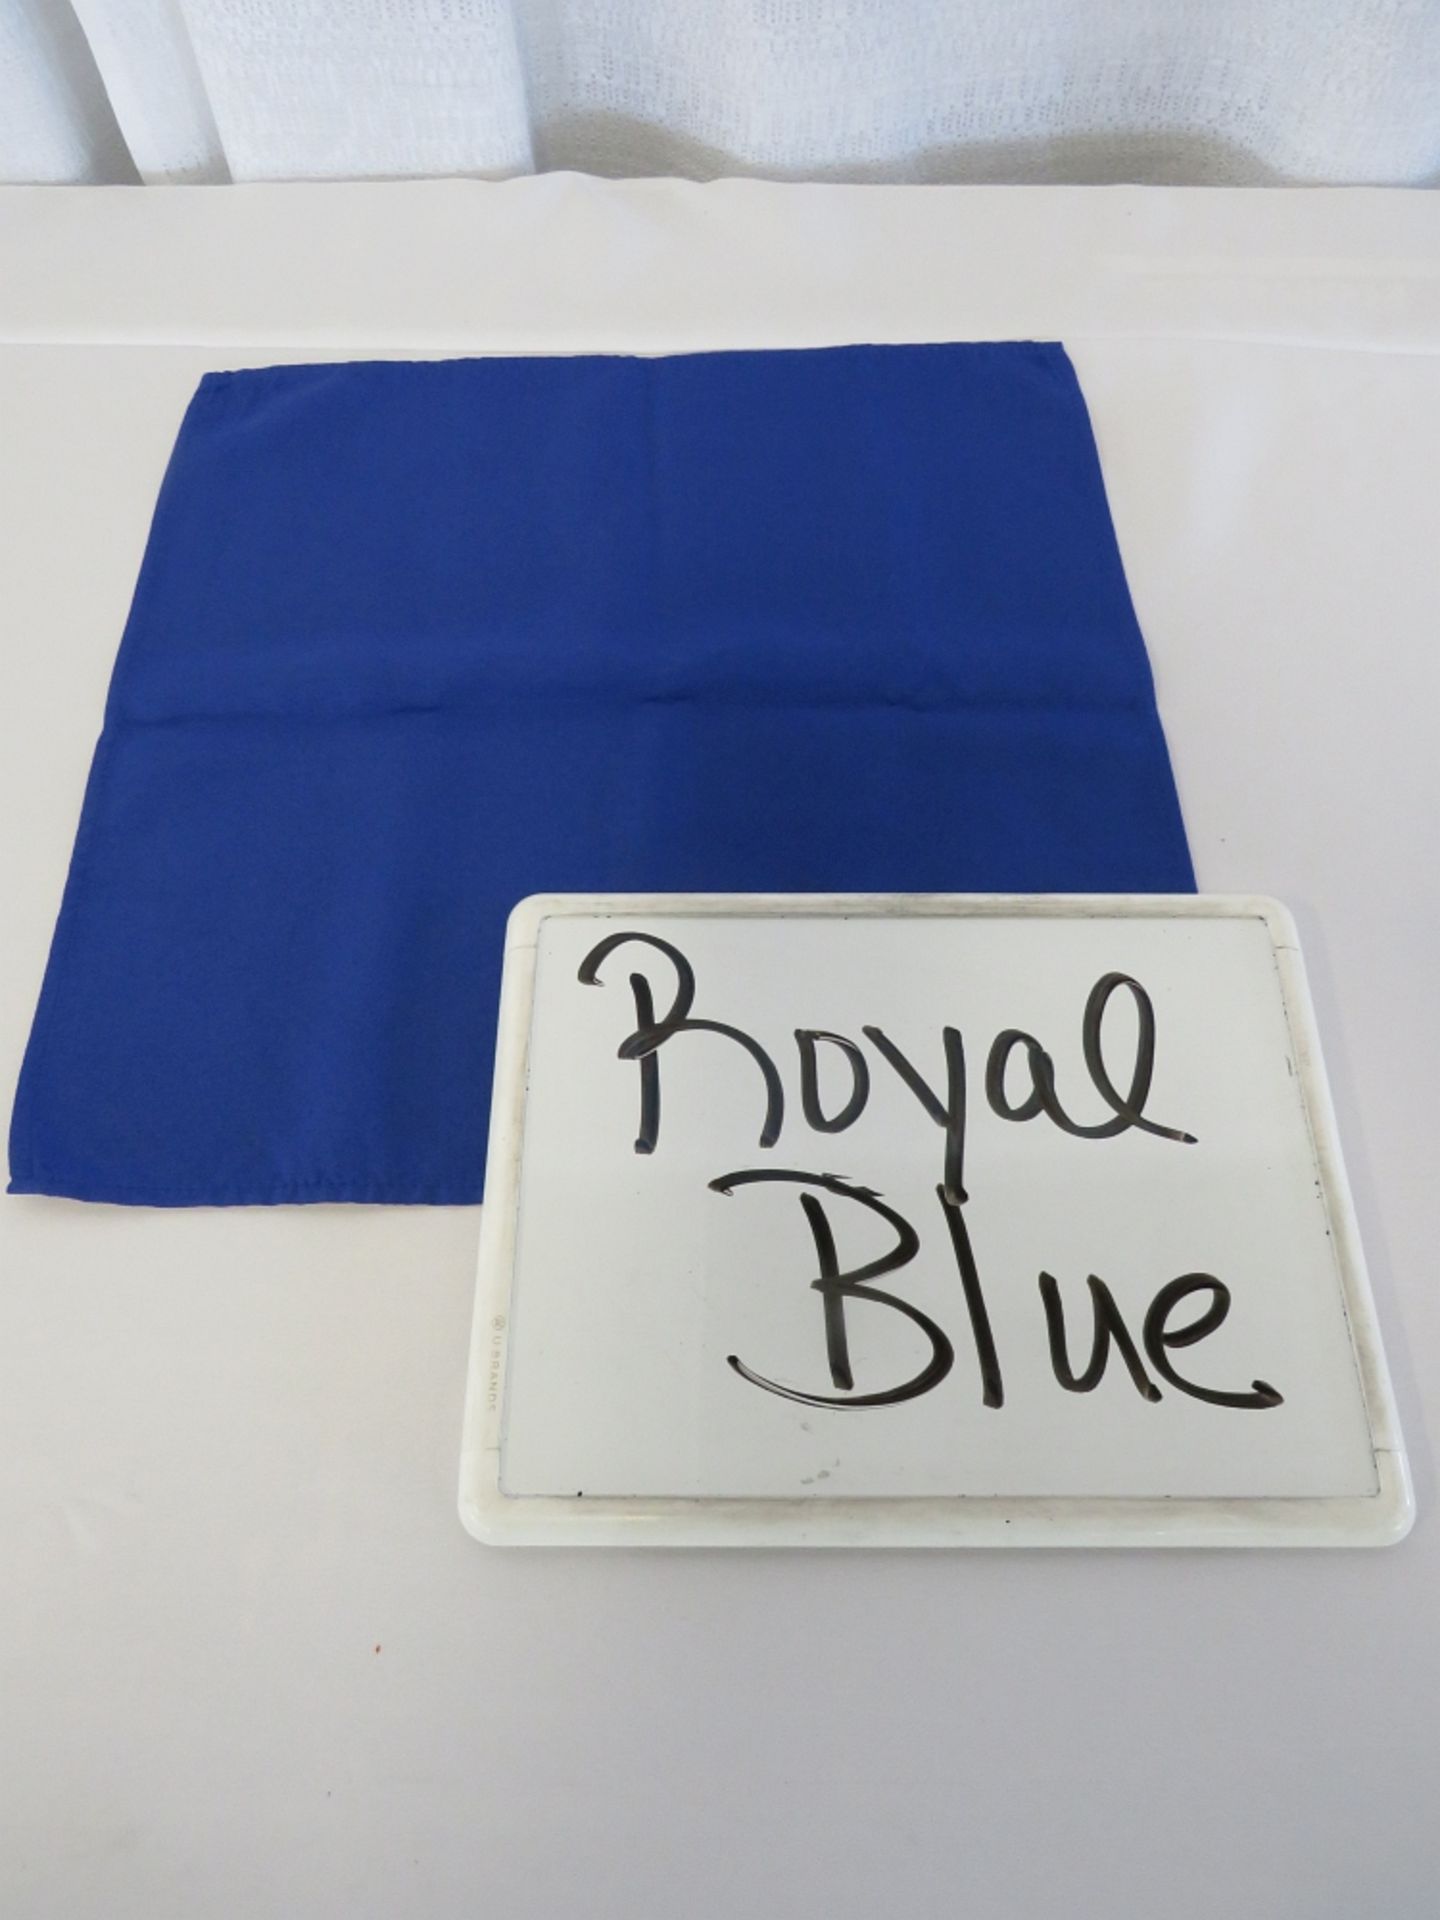 90" x 152" Tablecloth, Royal Blue